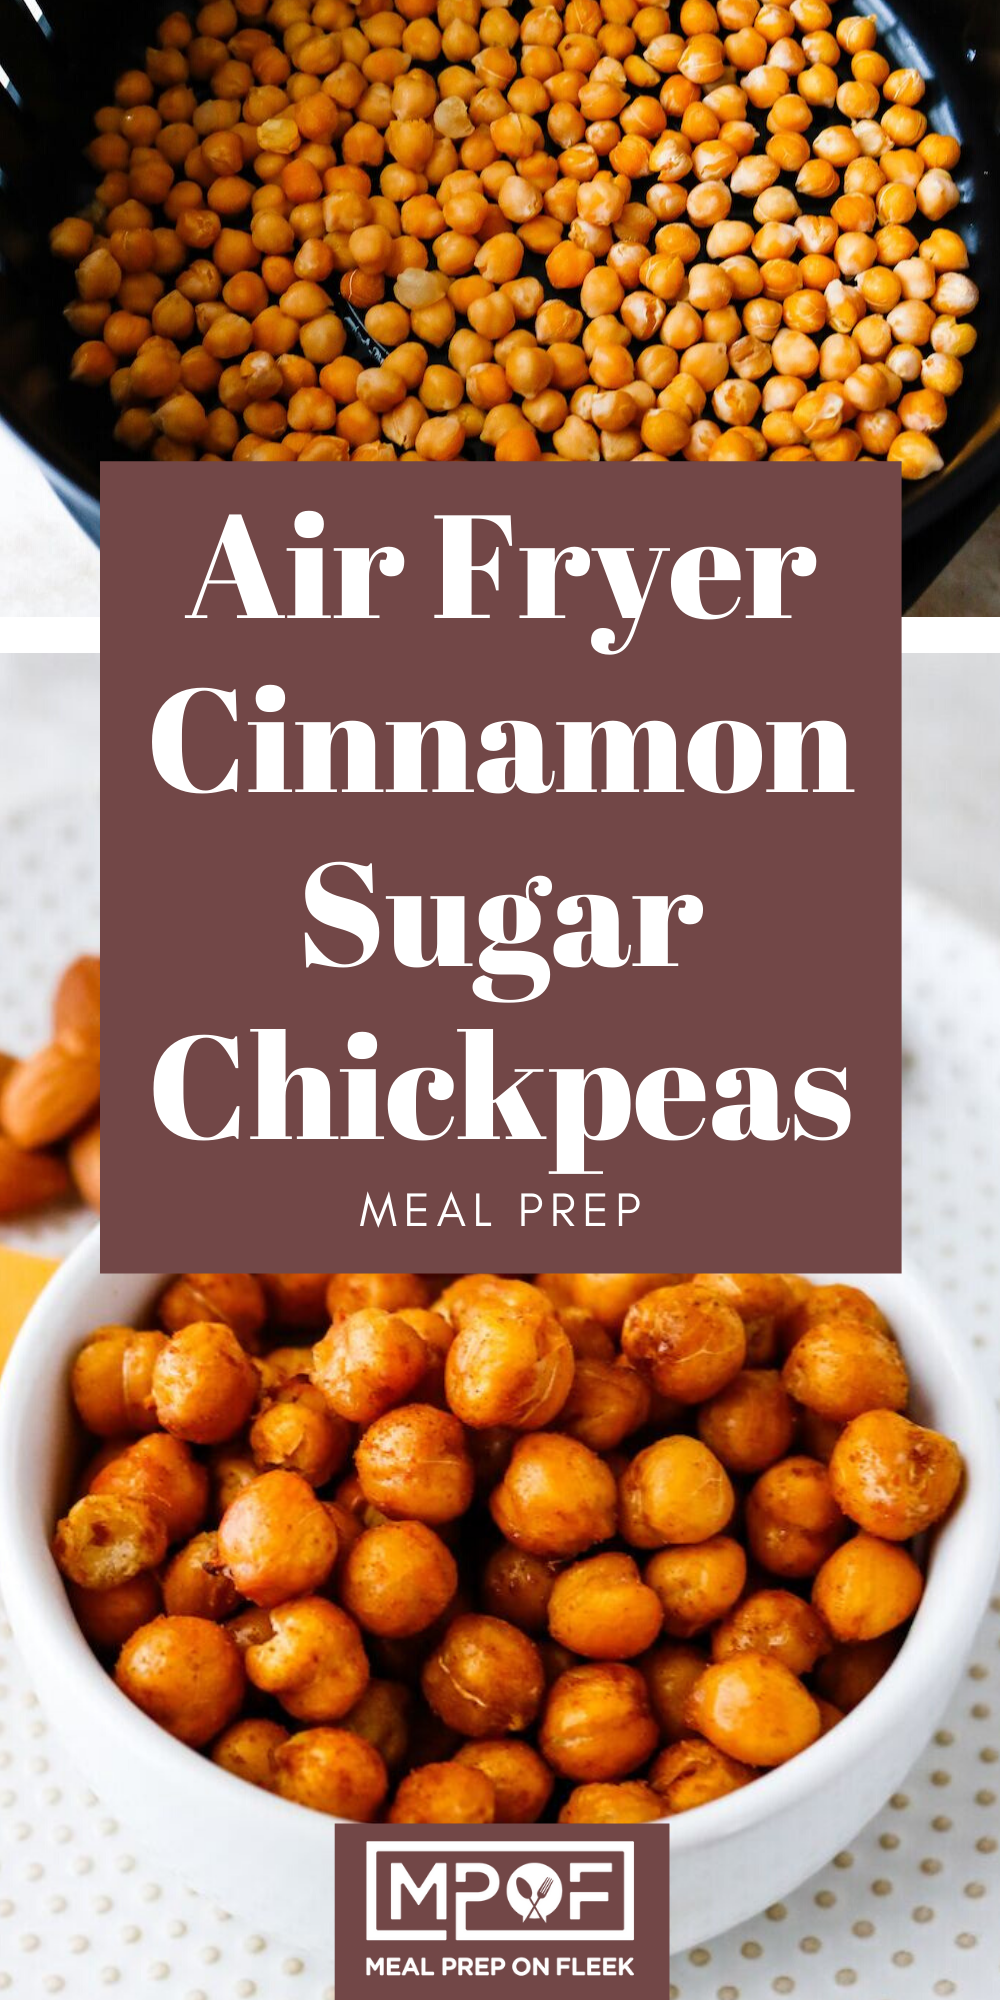 Air Fryer Cinnamon Sugar Chickpeas